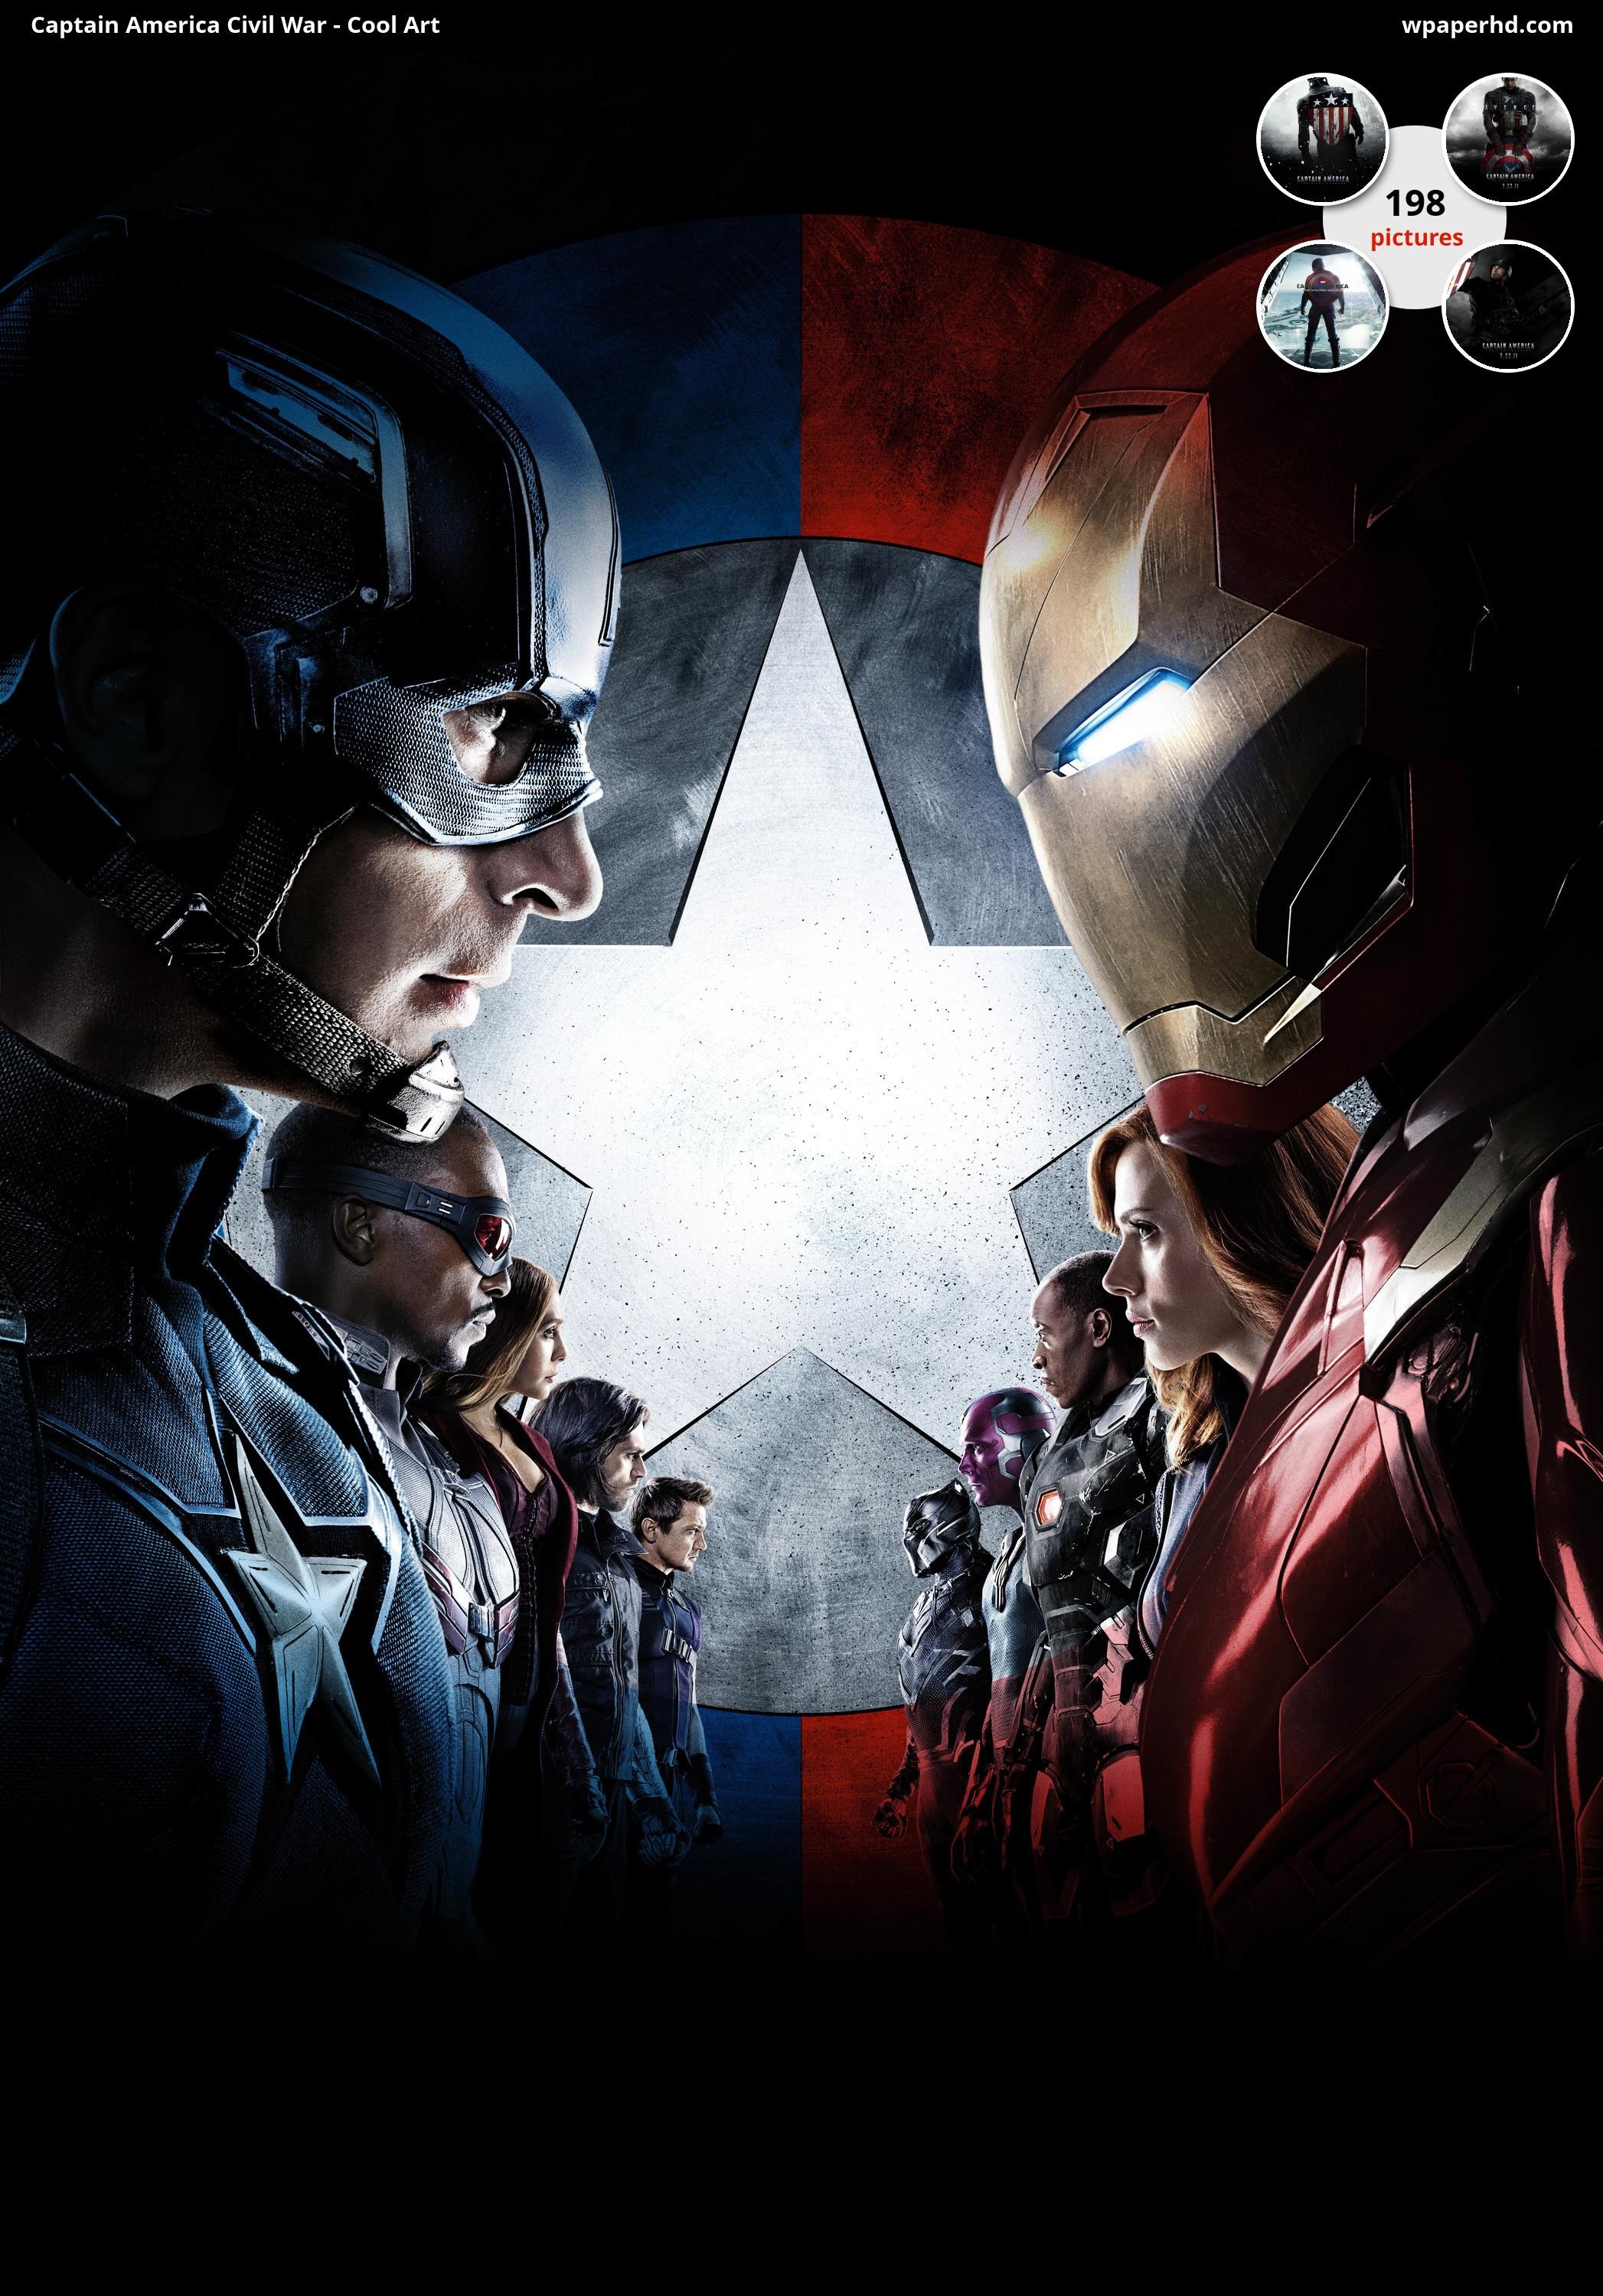 2094x3000 Captain America Civil War - Cool Art Wallpaper